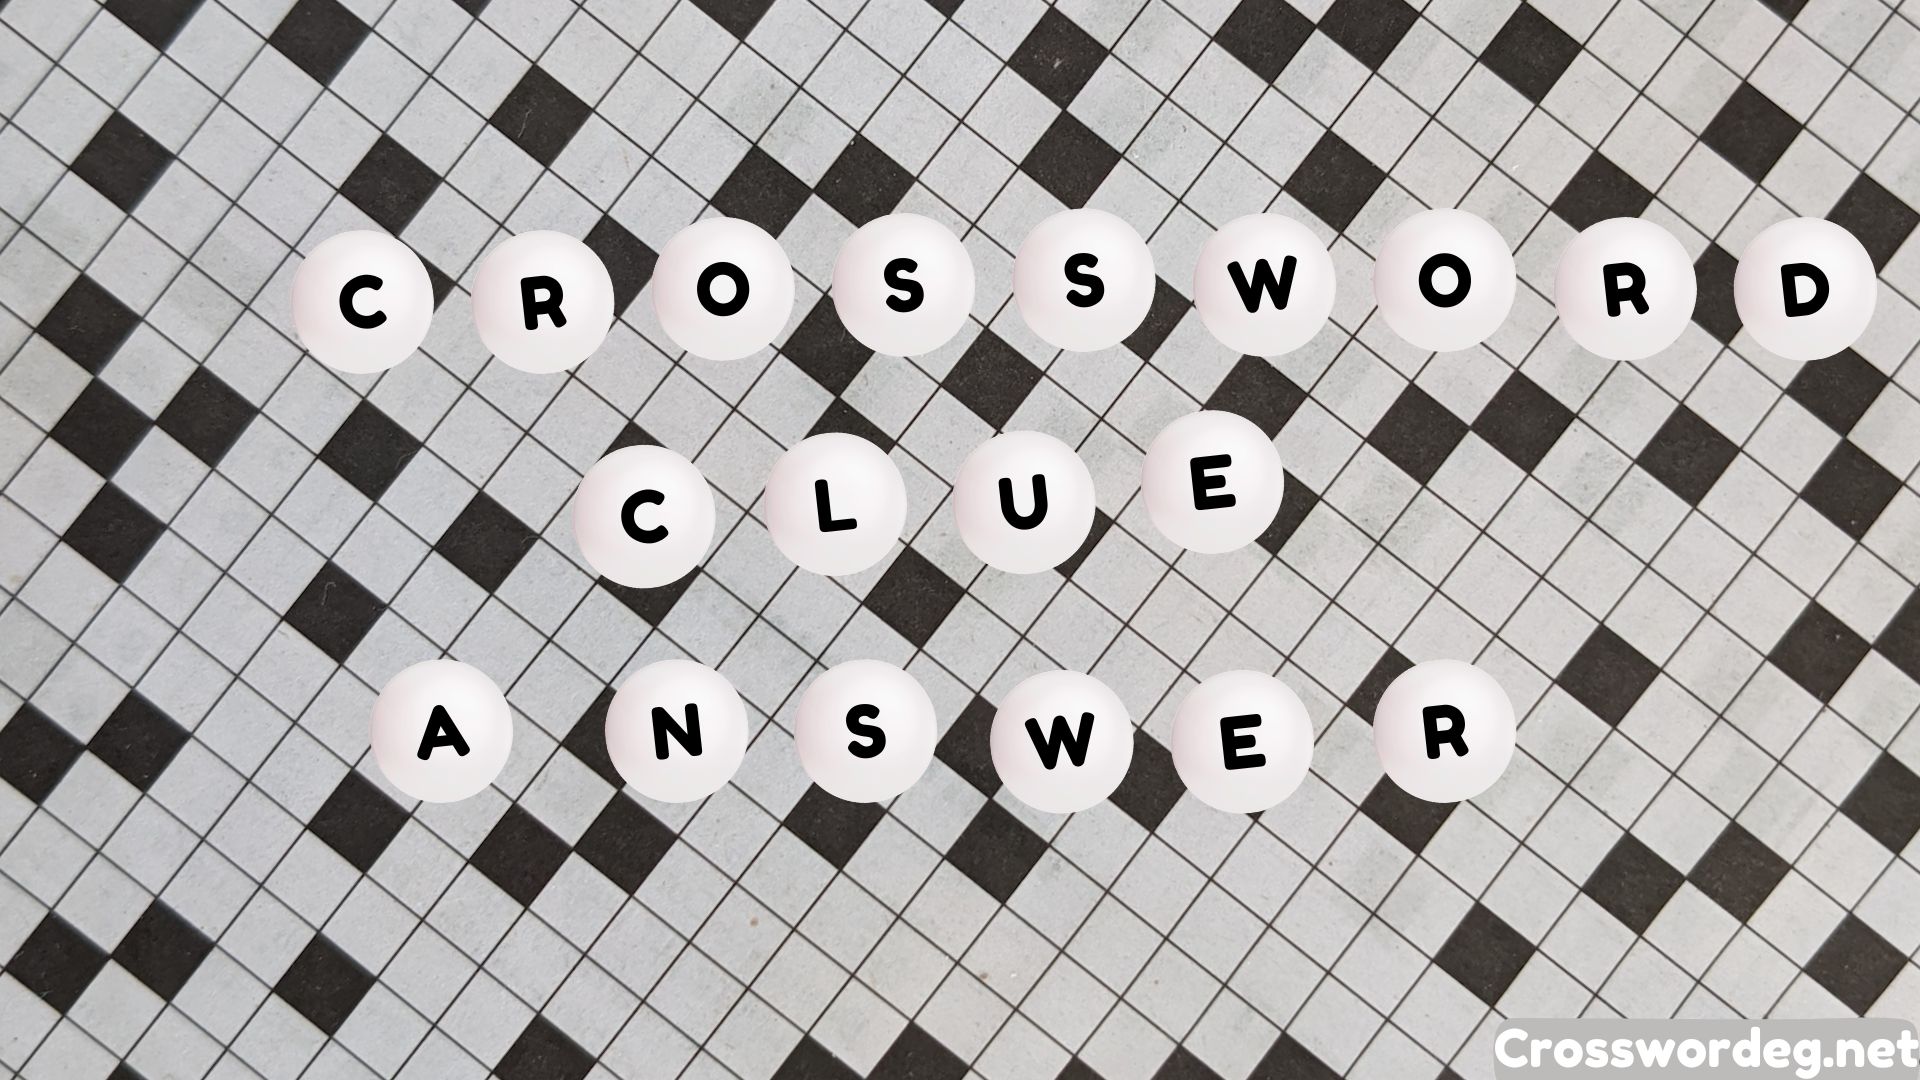 Stepford creator Crossword Clue Answers Crosswordeg net